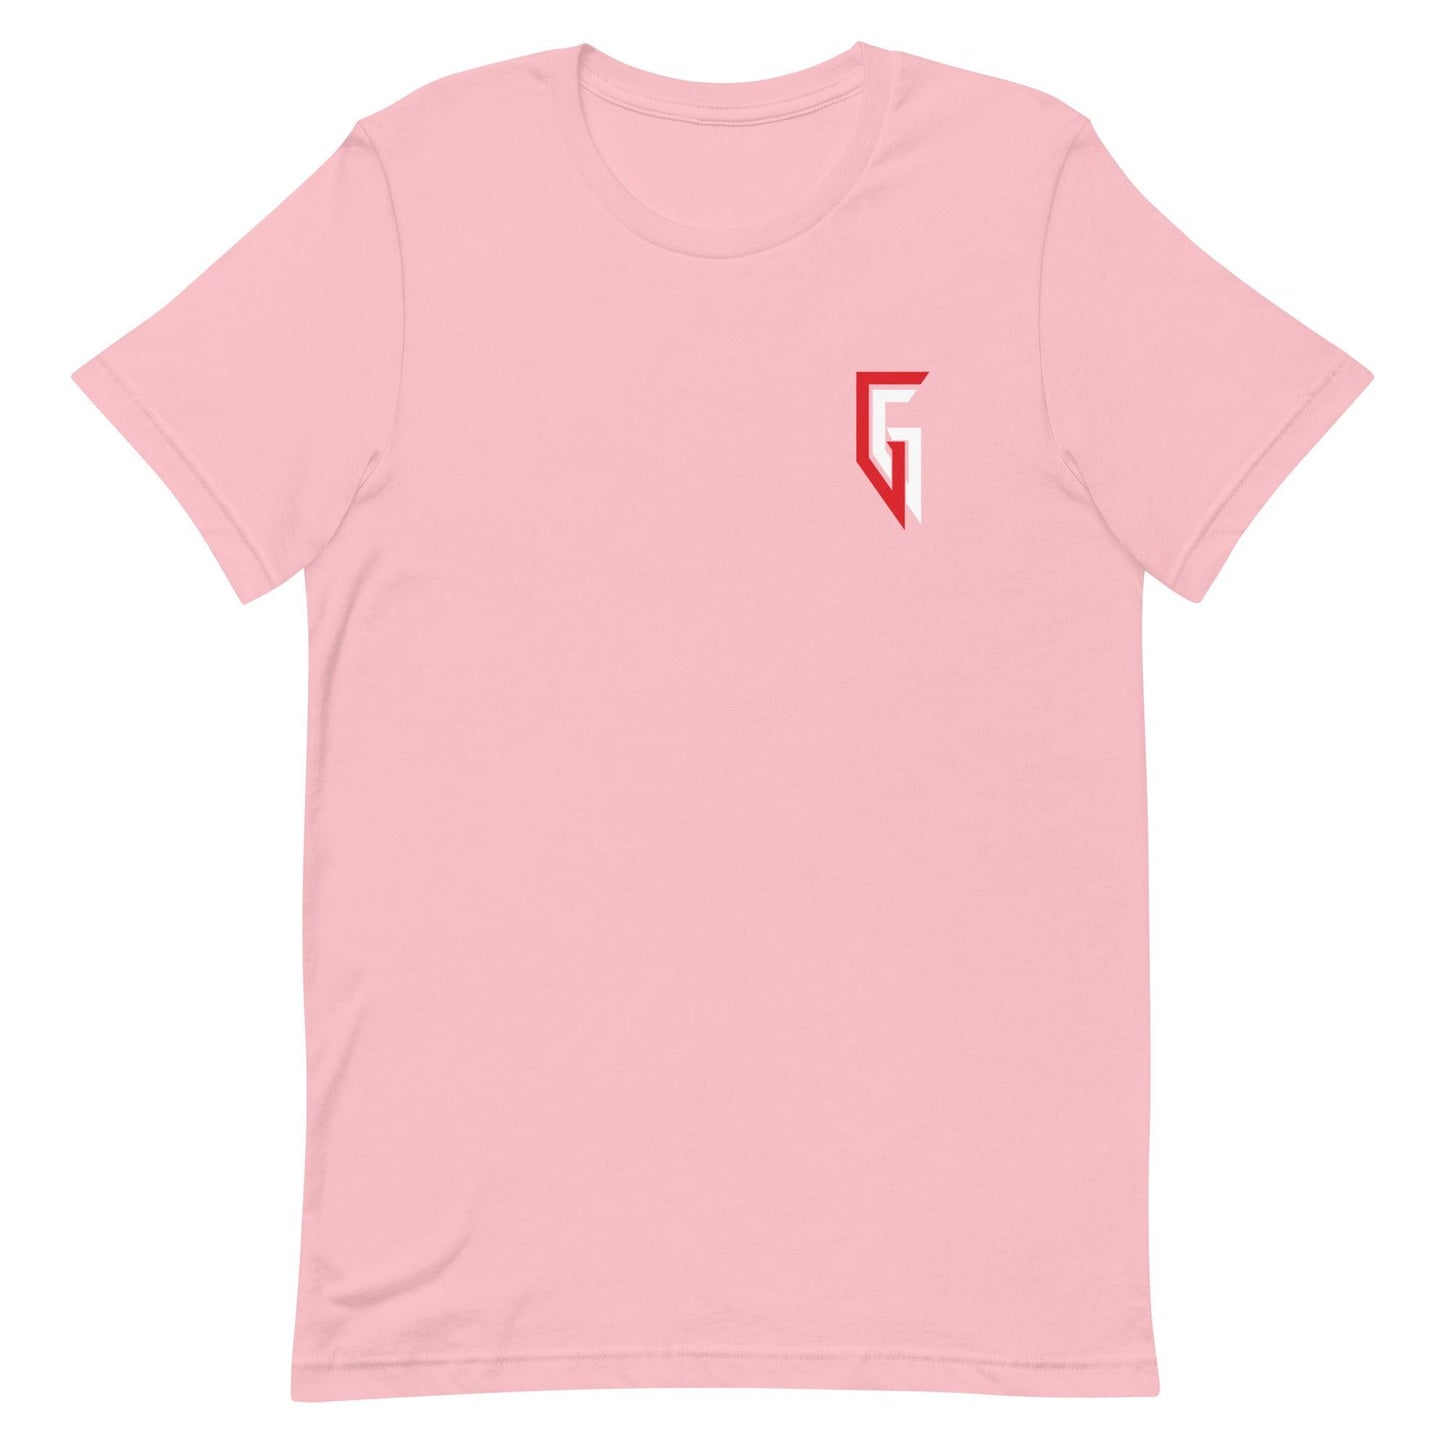 Gunnar Gottula "Signature" t-shirt - Fan Arch